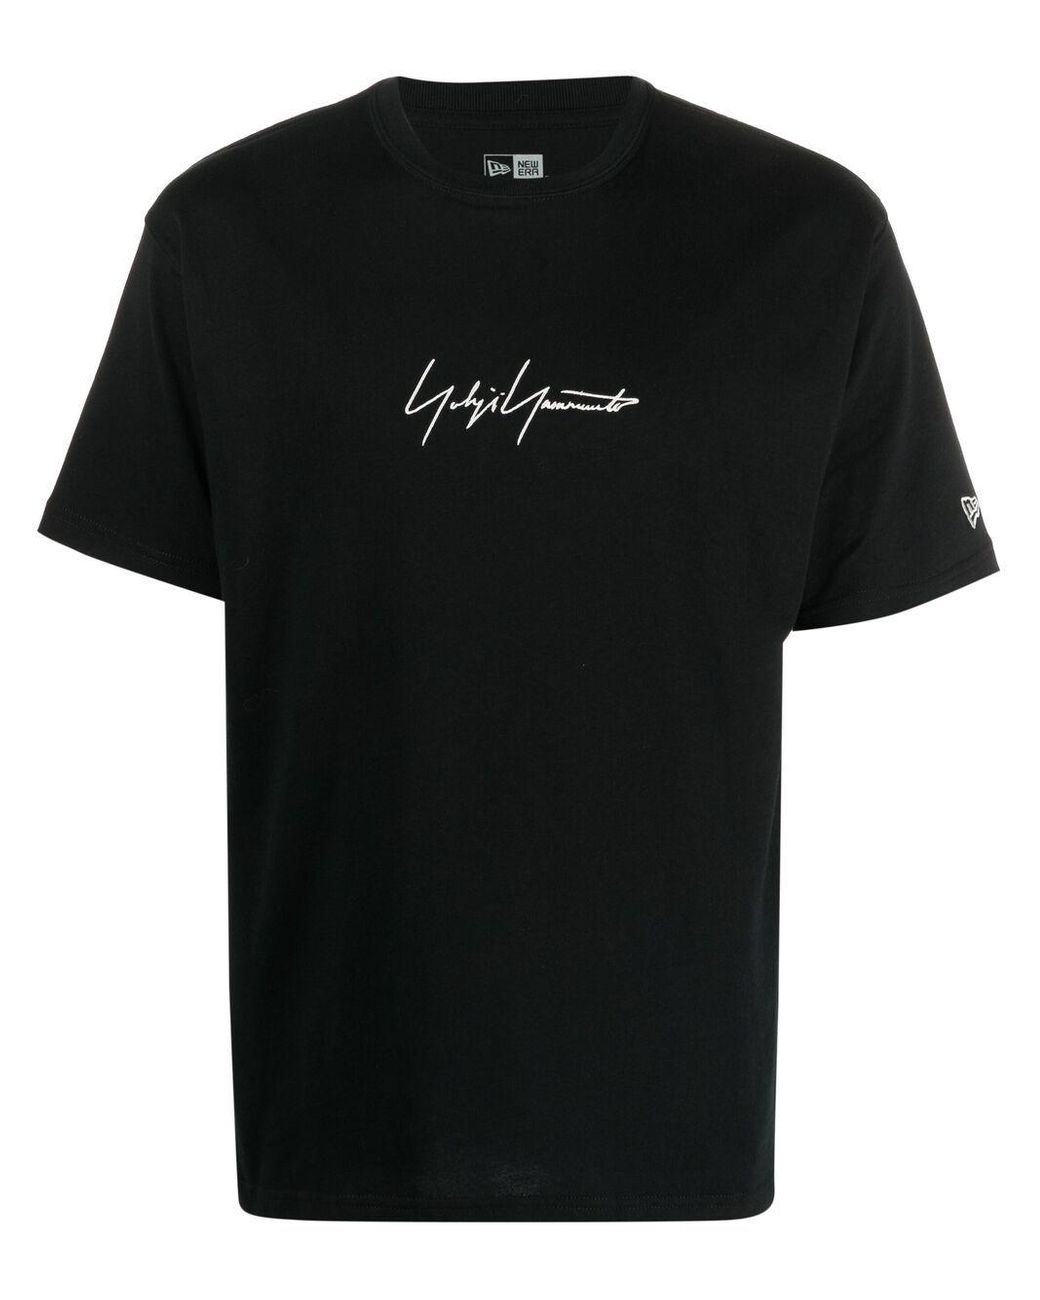 Yohji Yamamoto Logo-print Signature T-shirt in Black for Men - Lyst